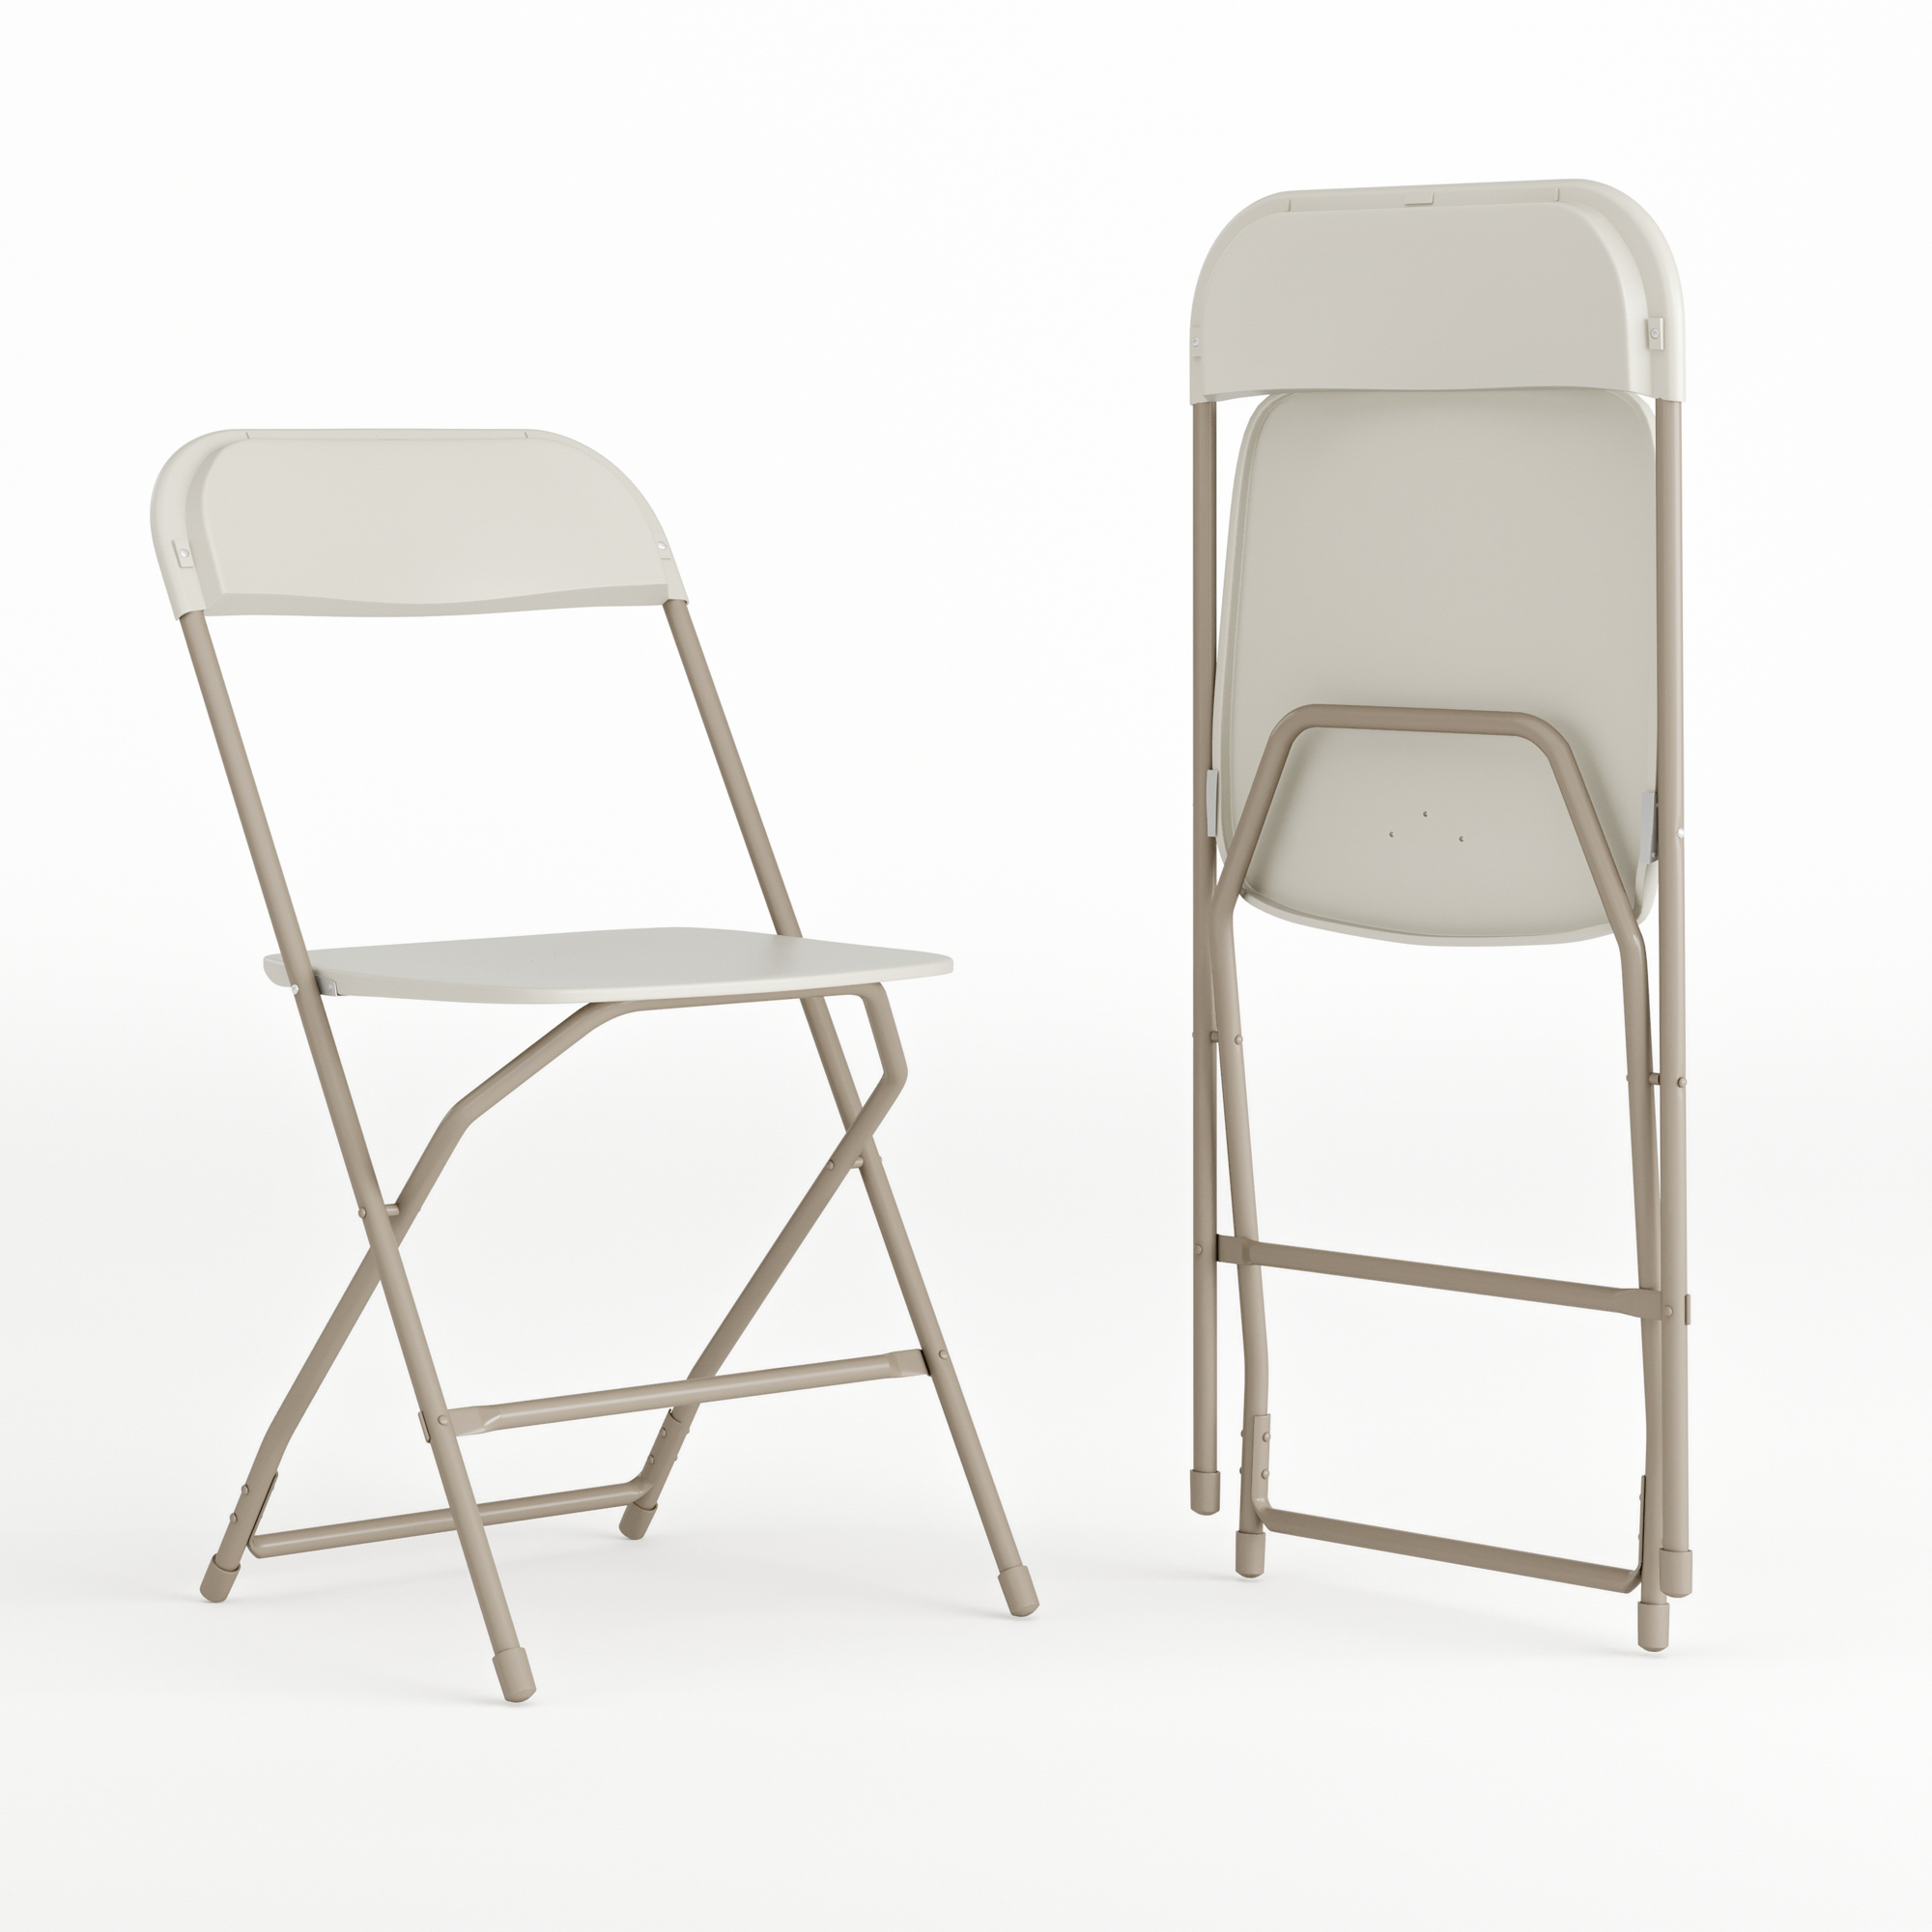 Flash Furniture, Folding Chair - Beige Plastic - 2 Pack, Primary Color Beige, Included (qty.) 2, Model 2LEL3BEIGE